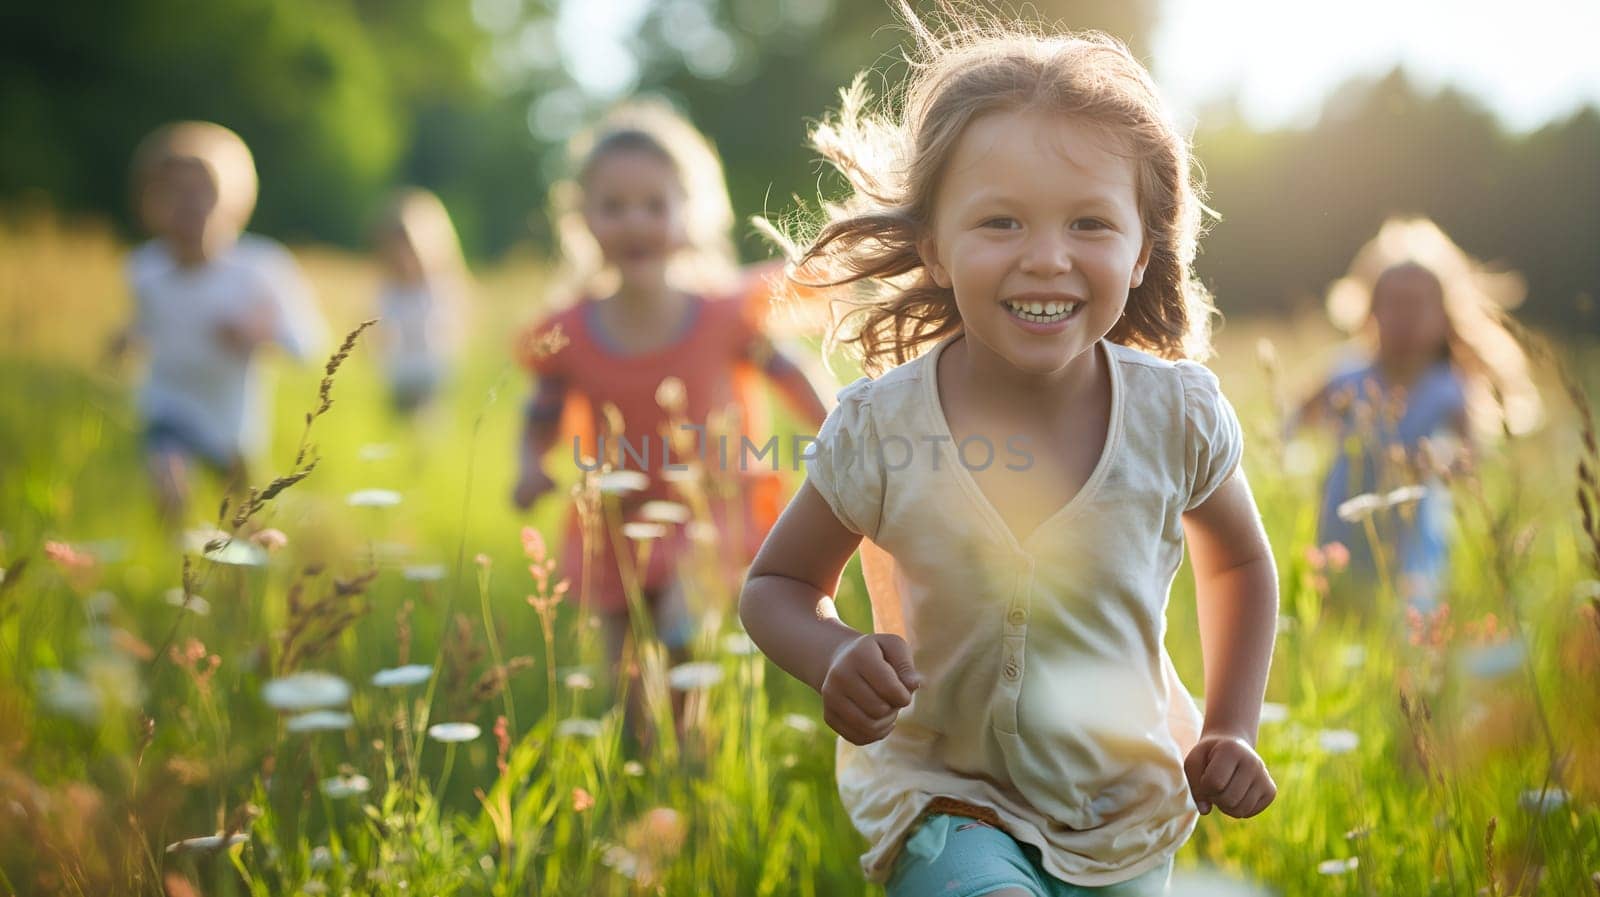 Joyful Children Playing Tag in Sunny Meadow at Dusk by chrisroll